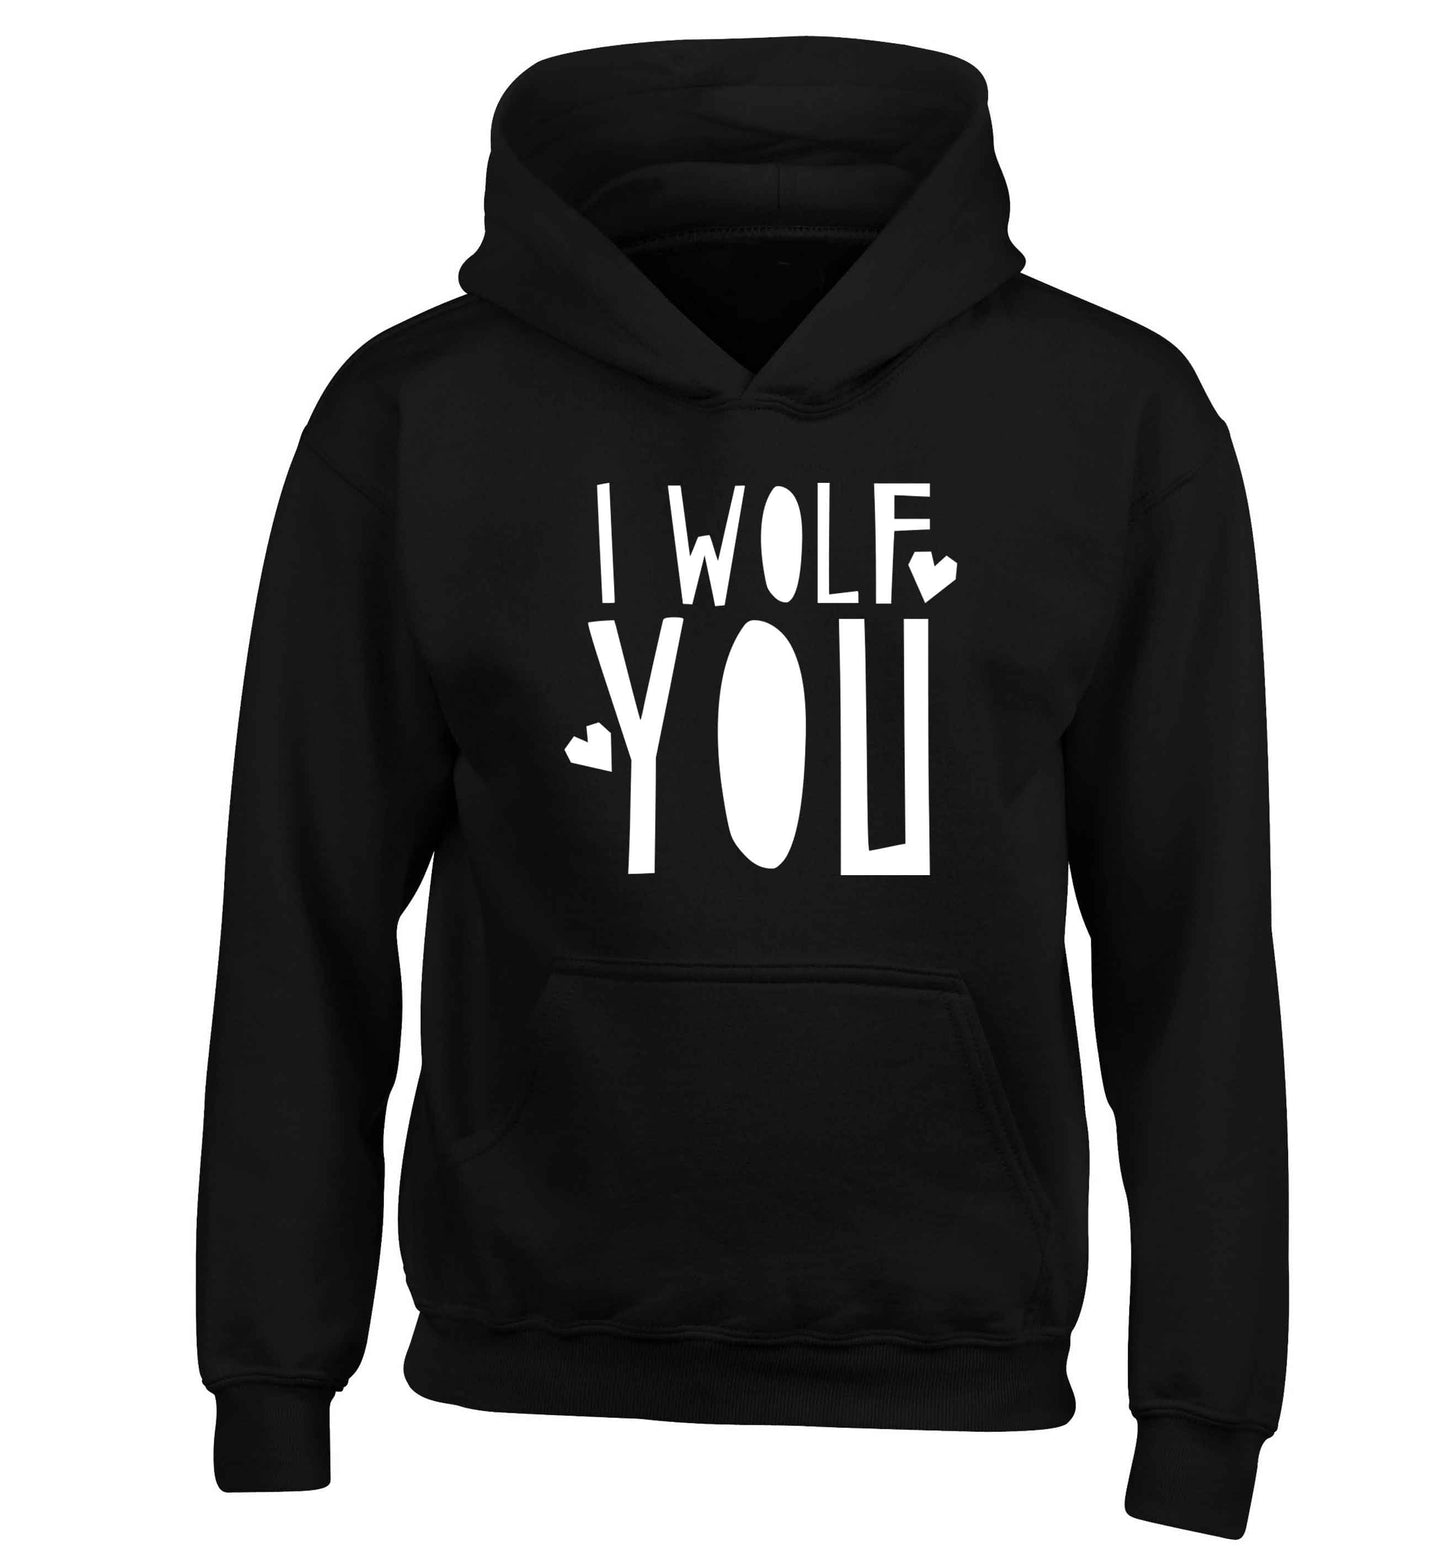 I wolf you children's black hoodie 12-13 Years